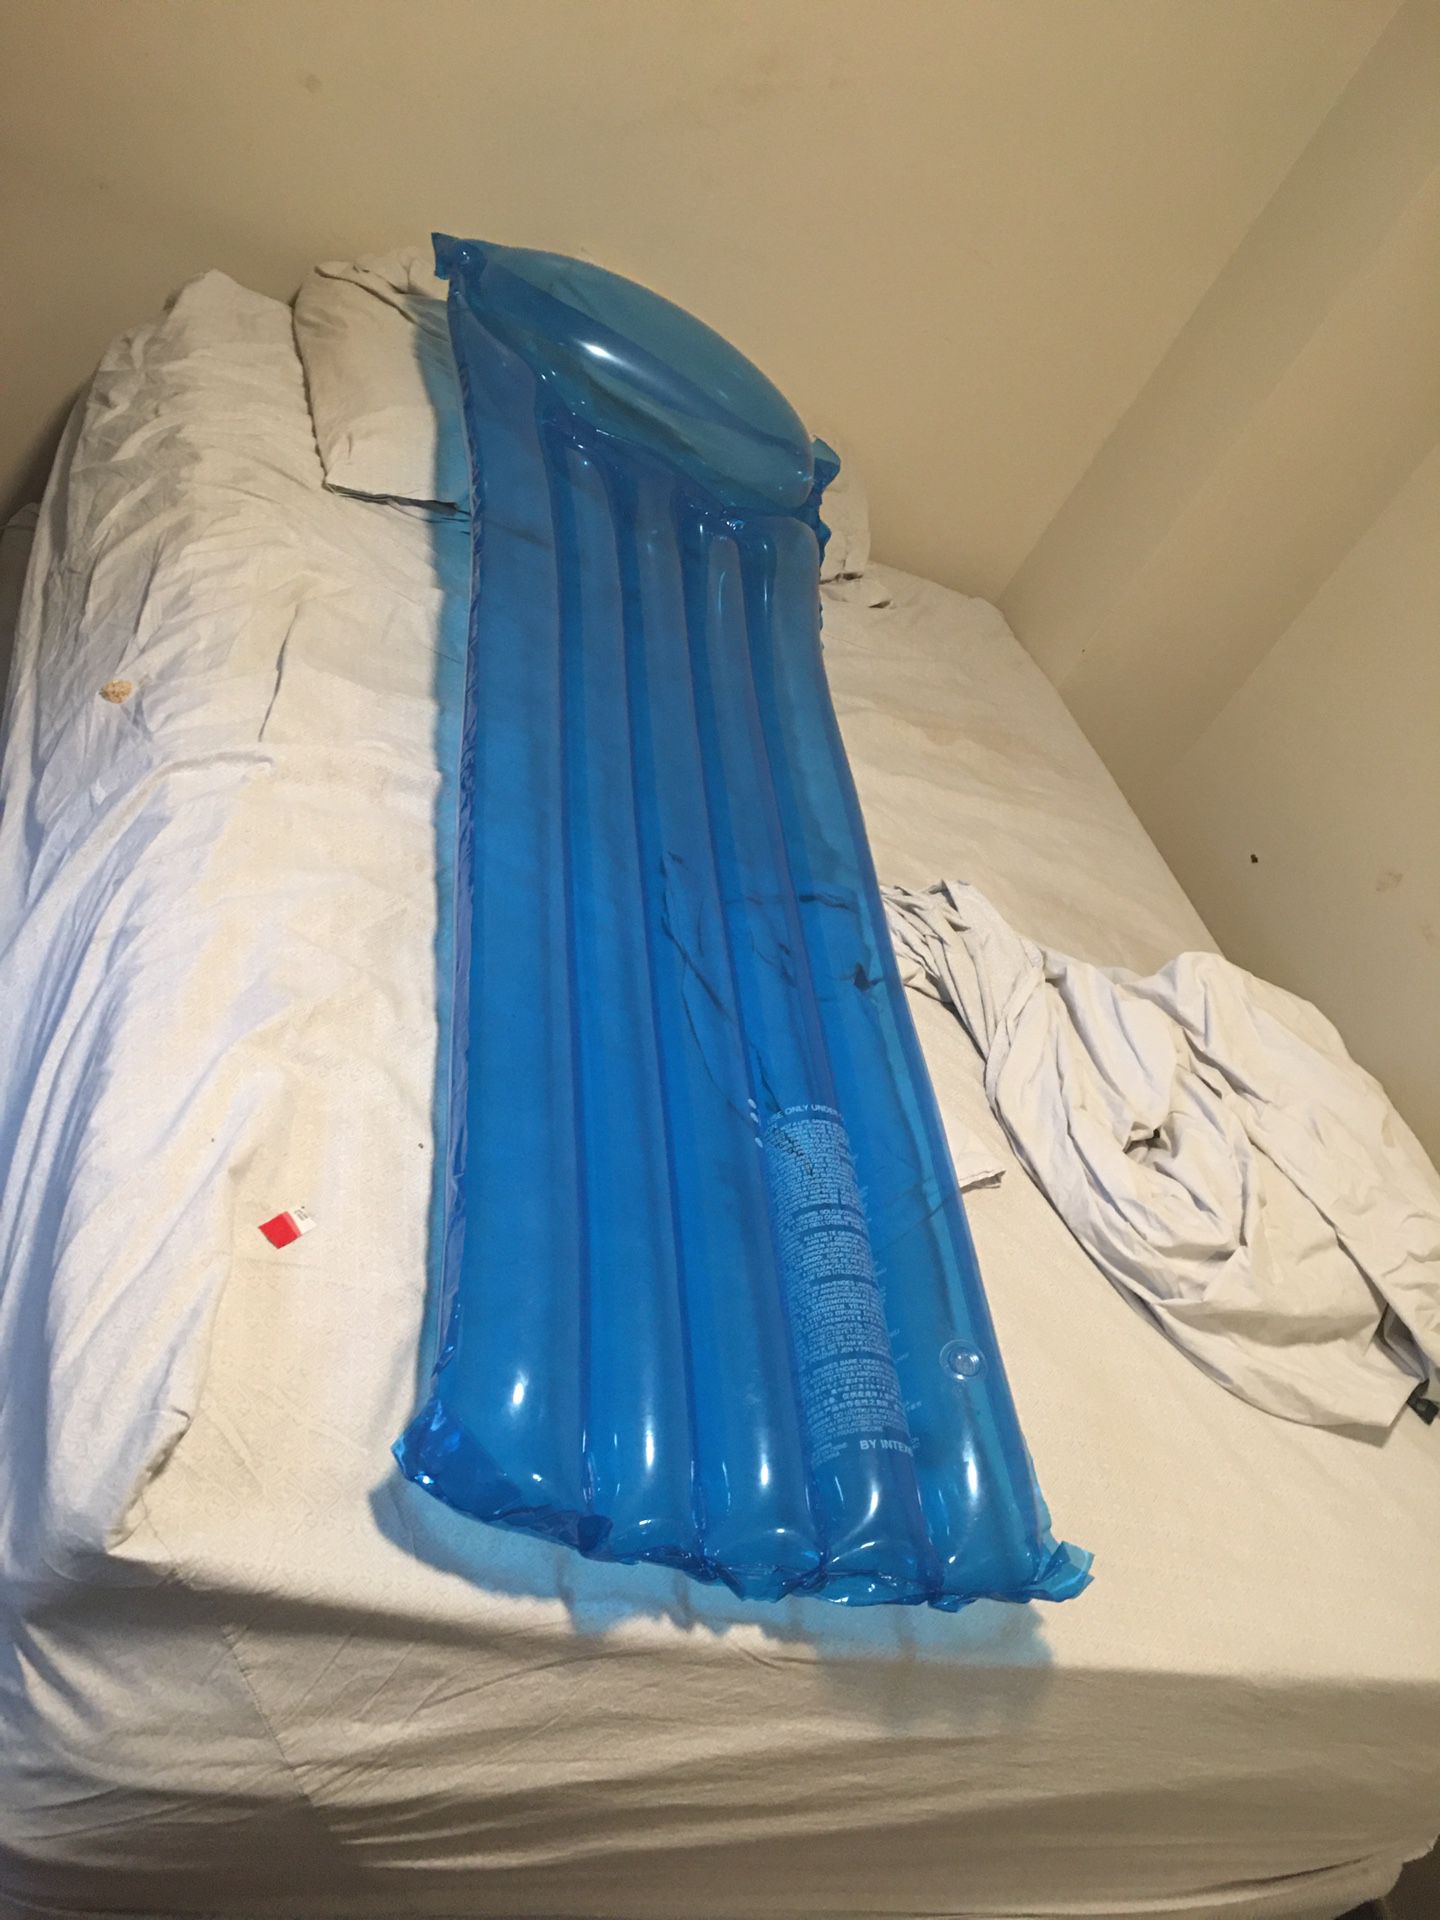 Intex air mattress